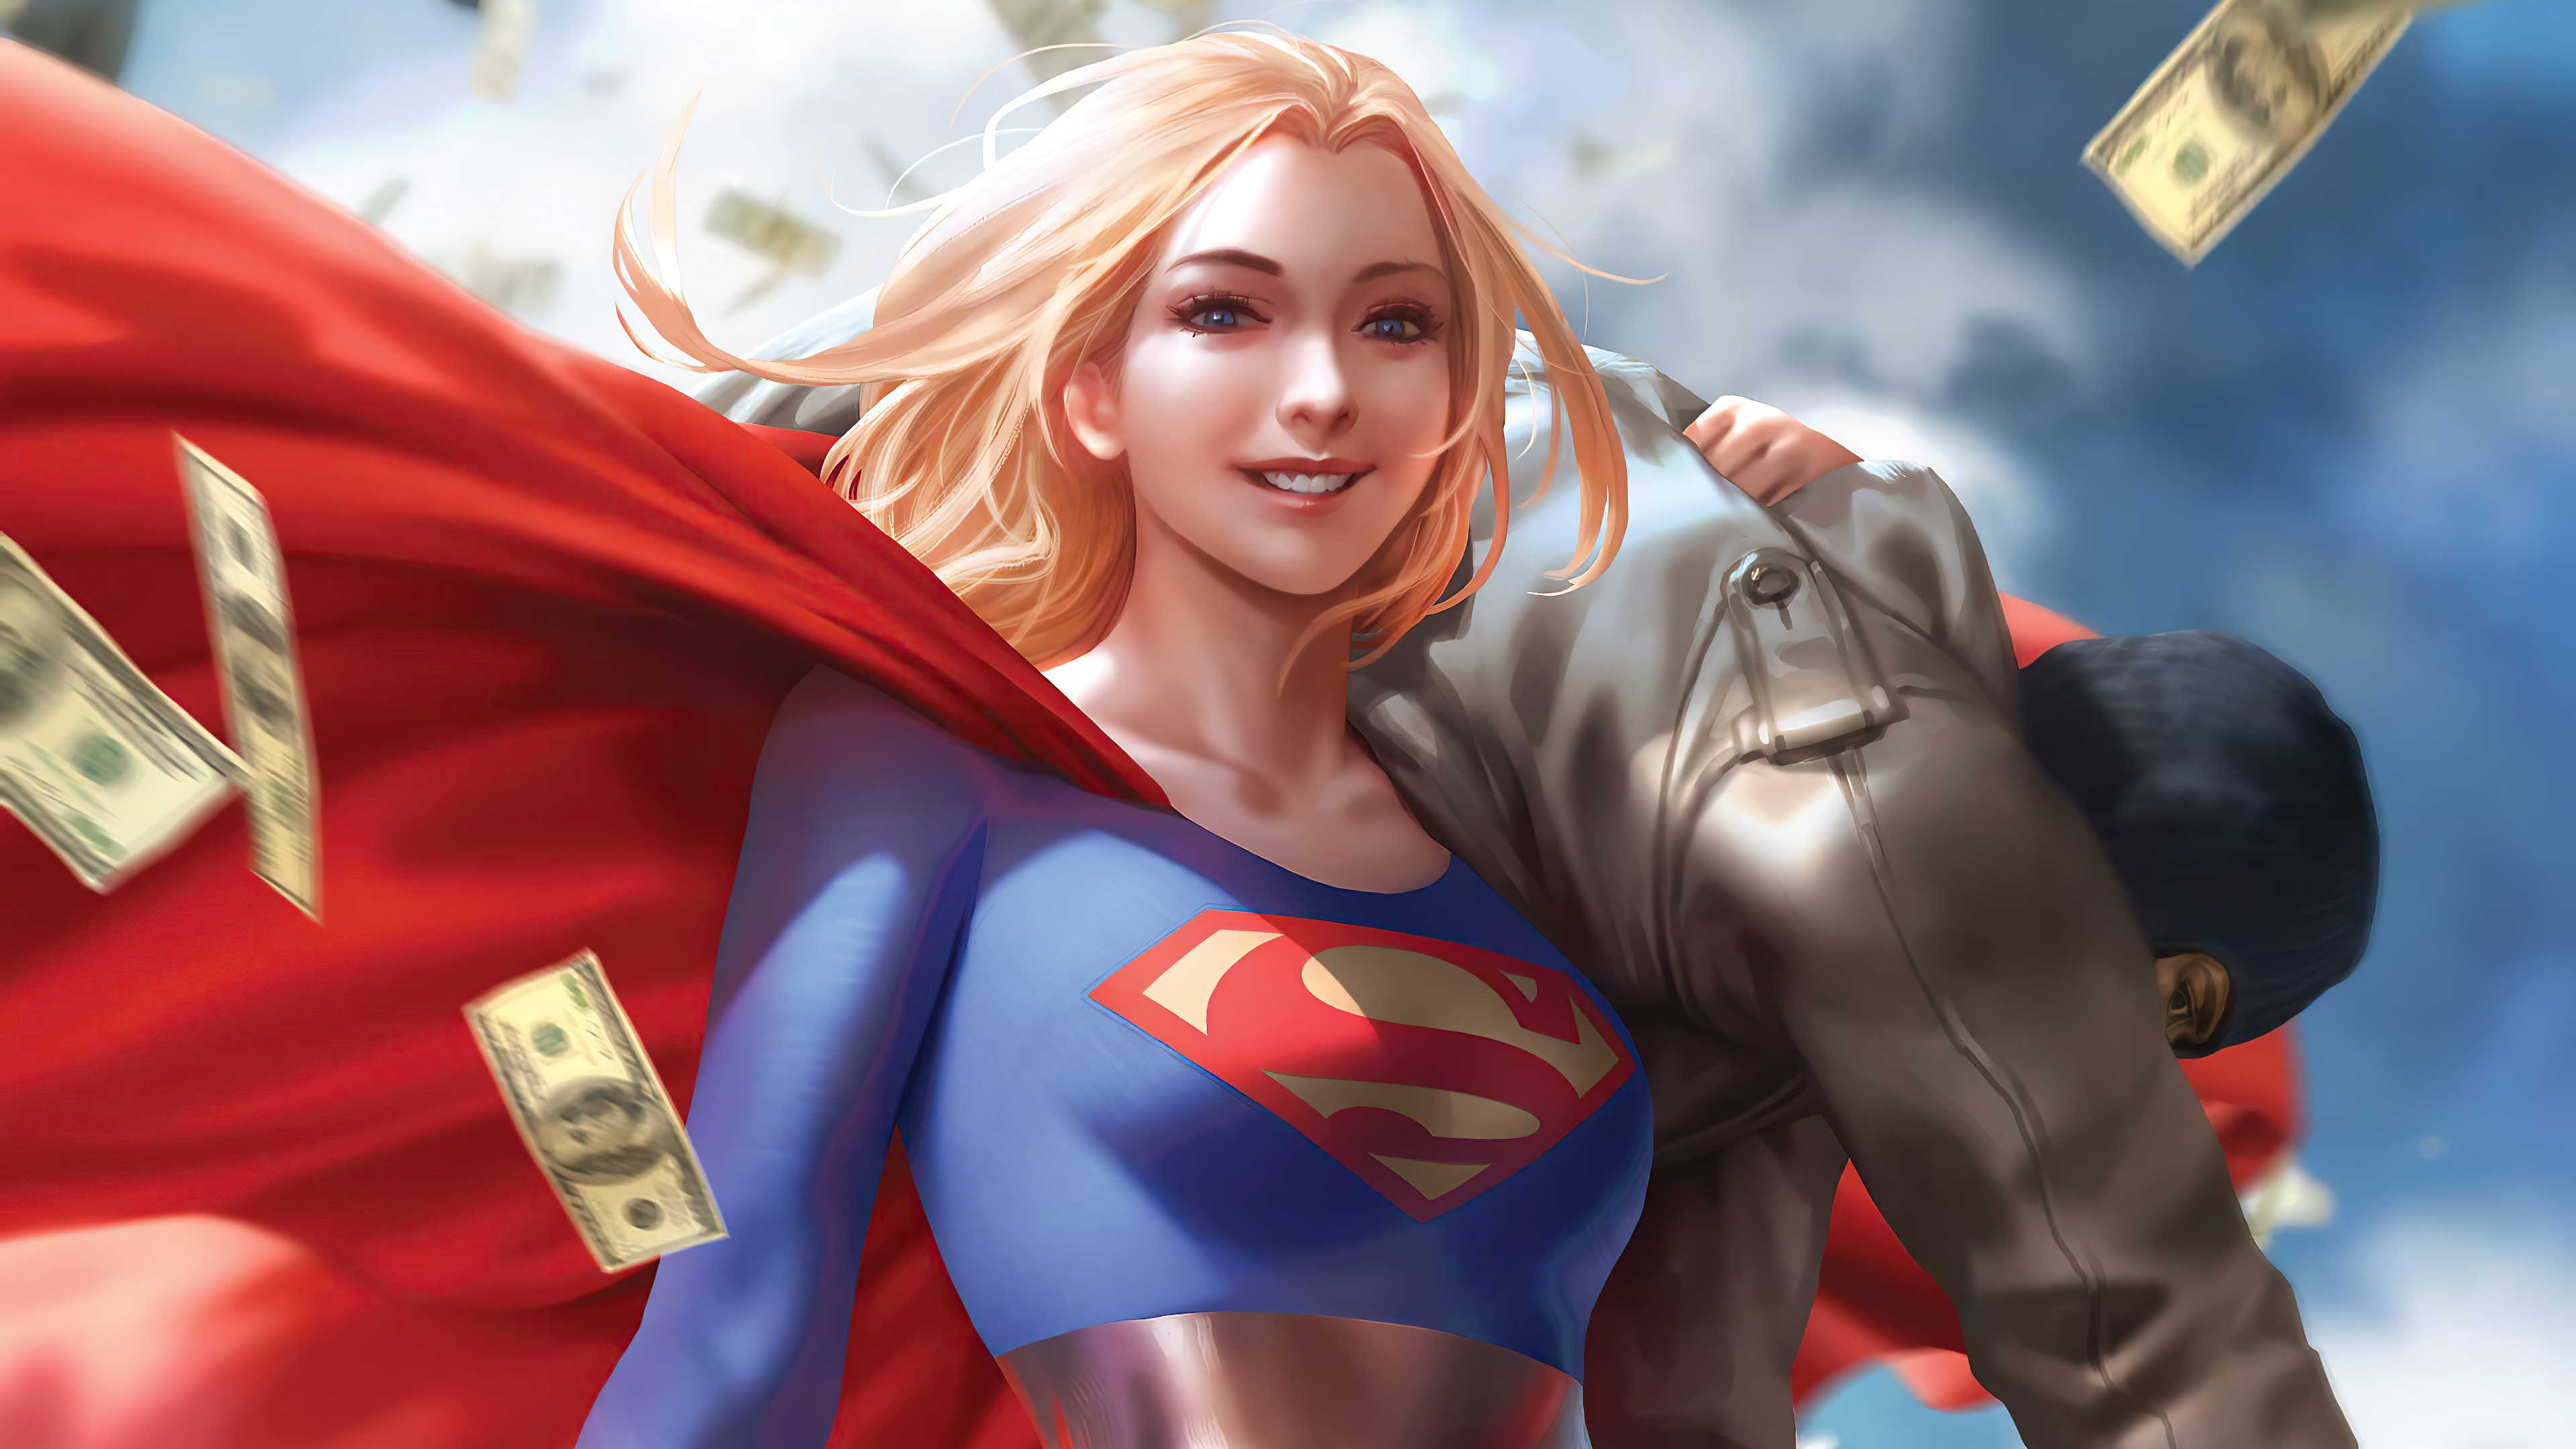 Supergirl 4k Ultra HD Wallpaper